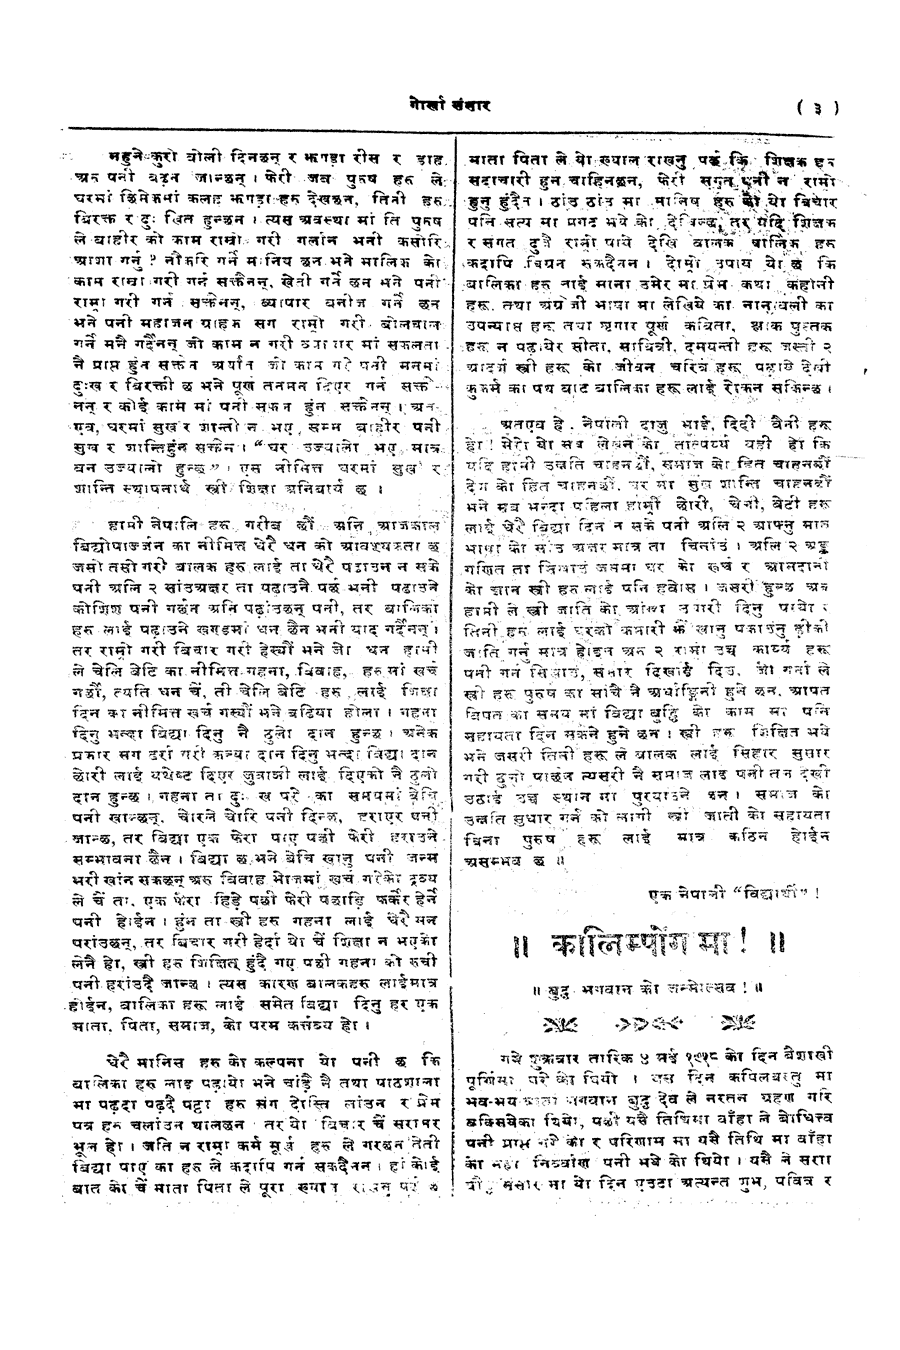 Gorkha Sansar, 1 June 1928, page 3